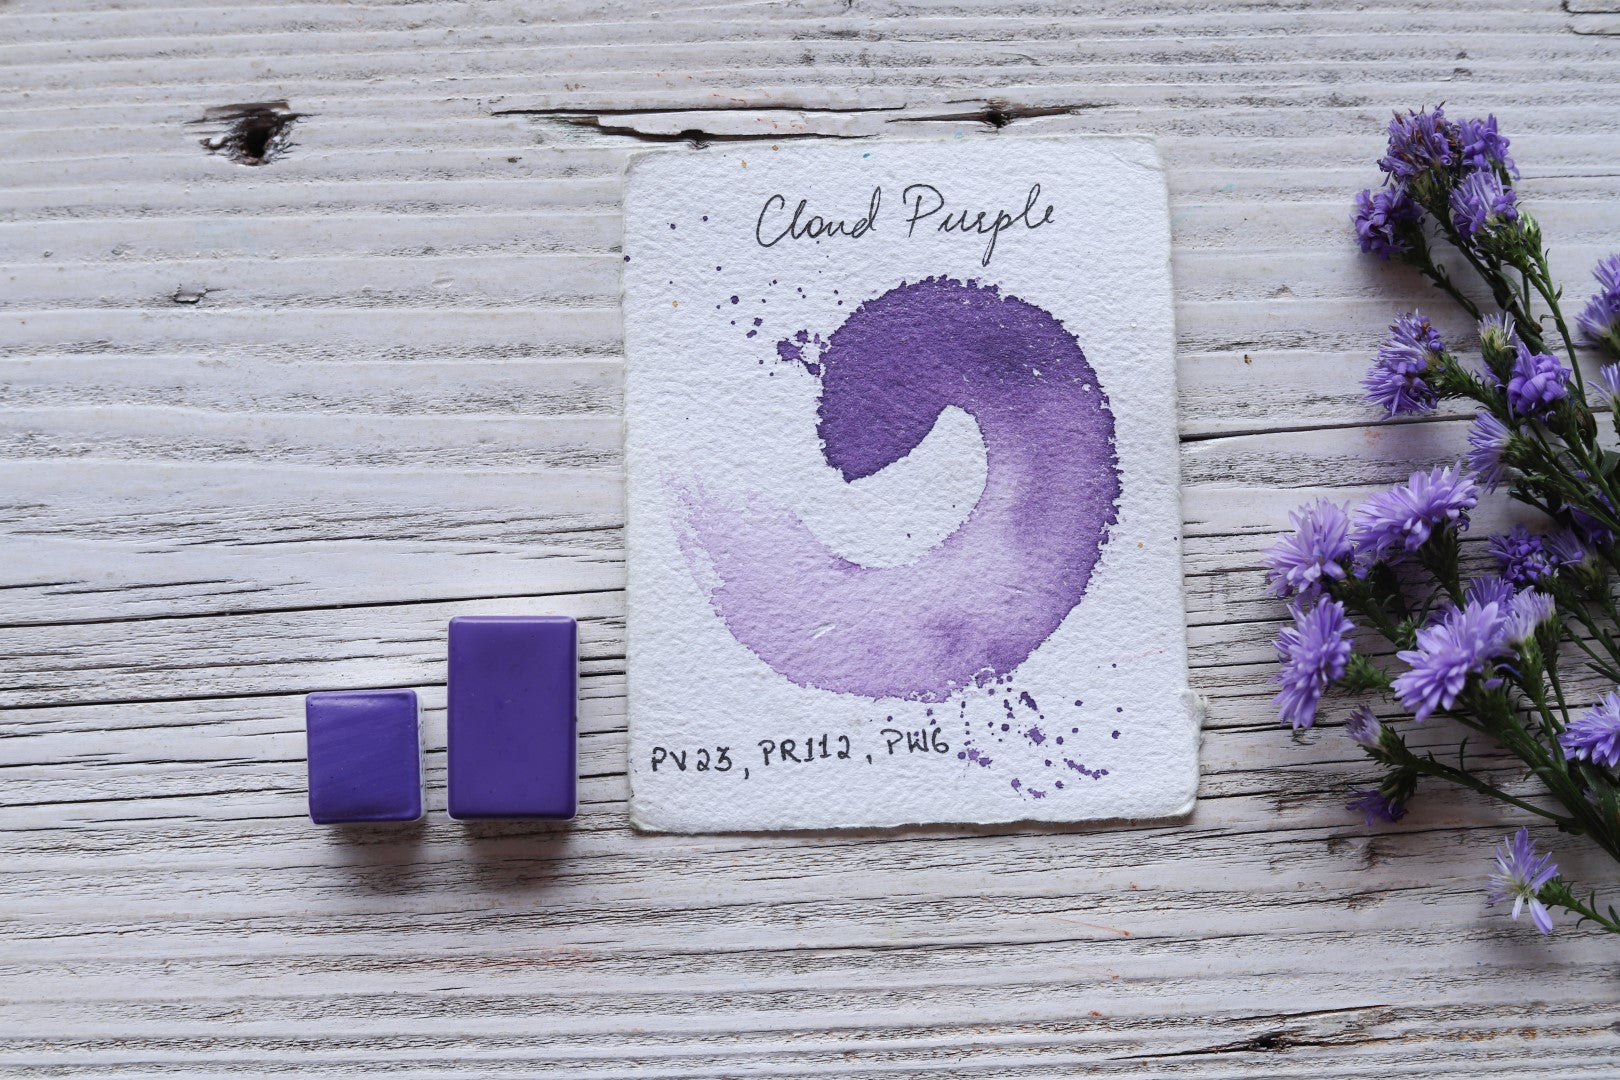 blue-pine-arts-premium-art-supplies-handmade-artisanal-watercolor-paints-professional-watercolors-handcrafted-cloud-purple-9062.jpg